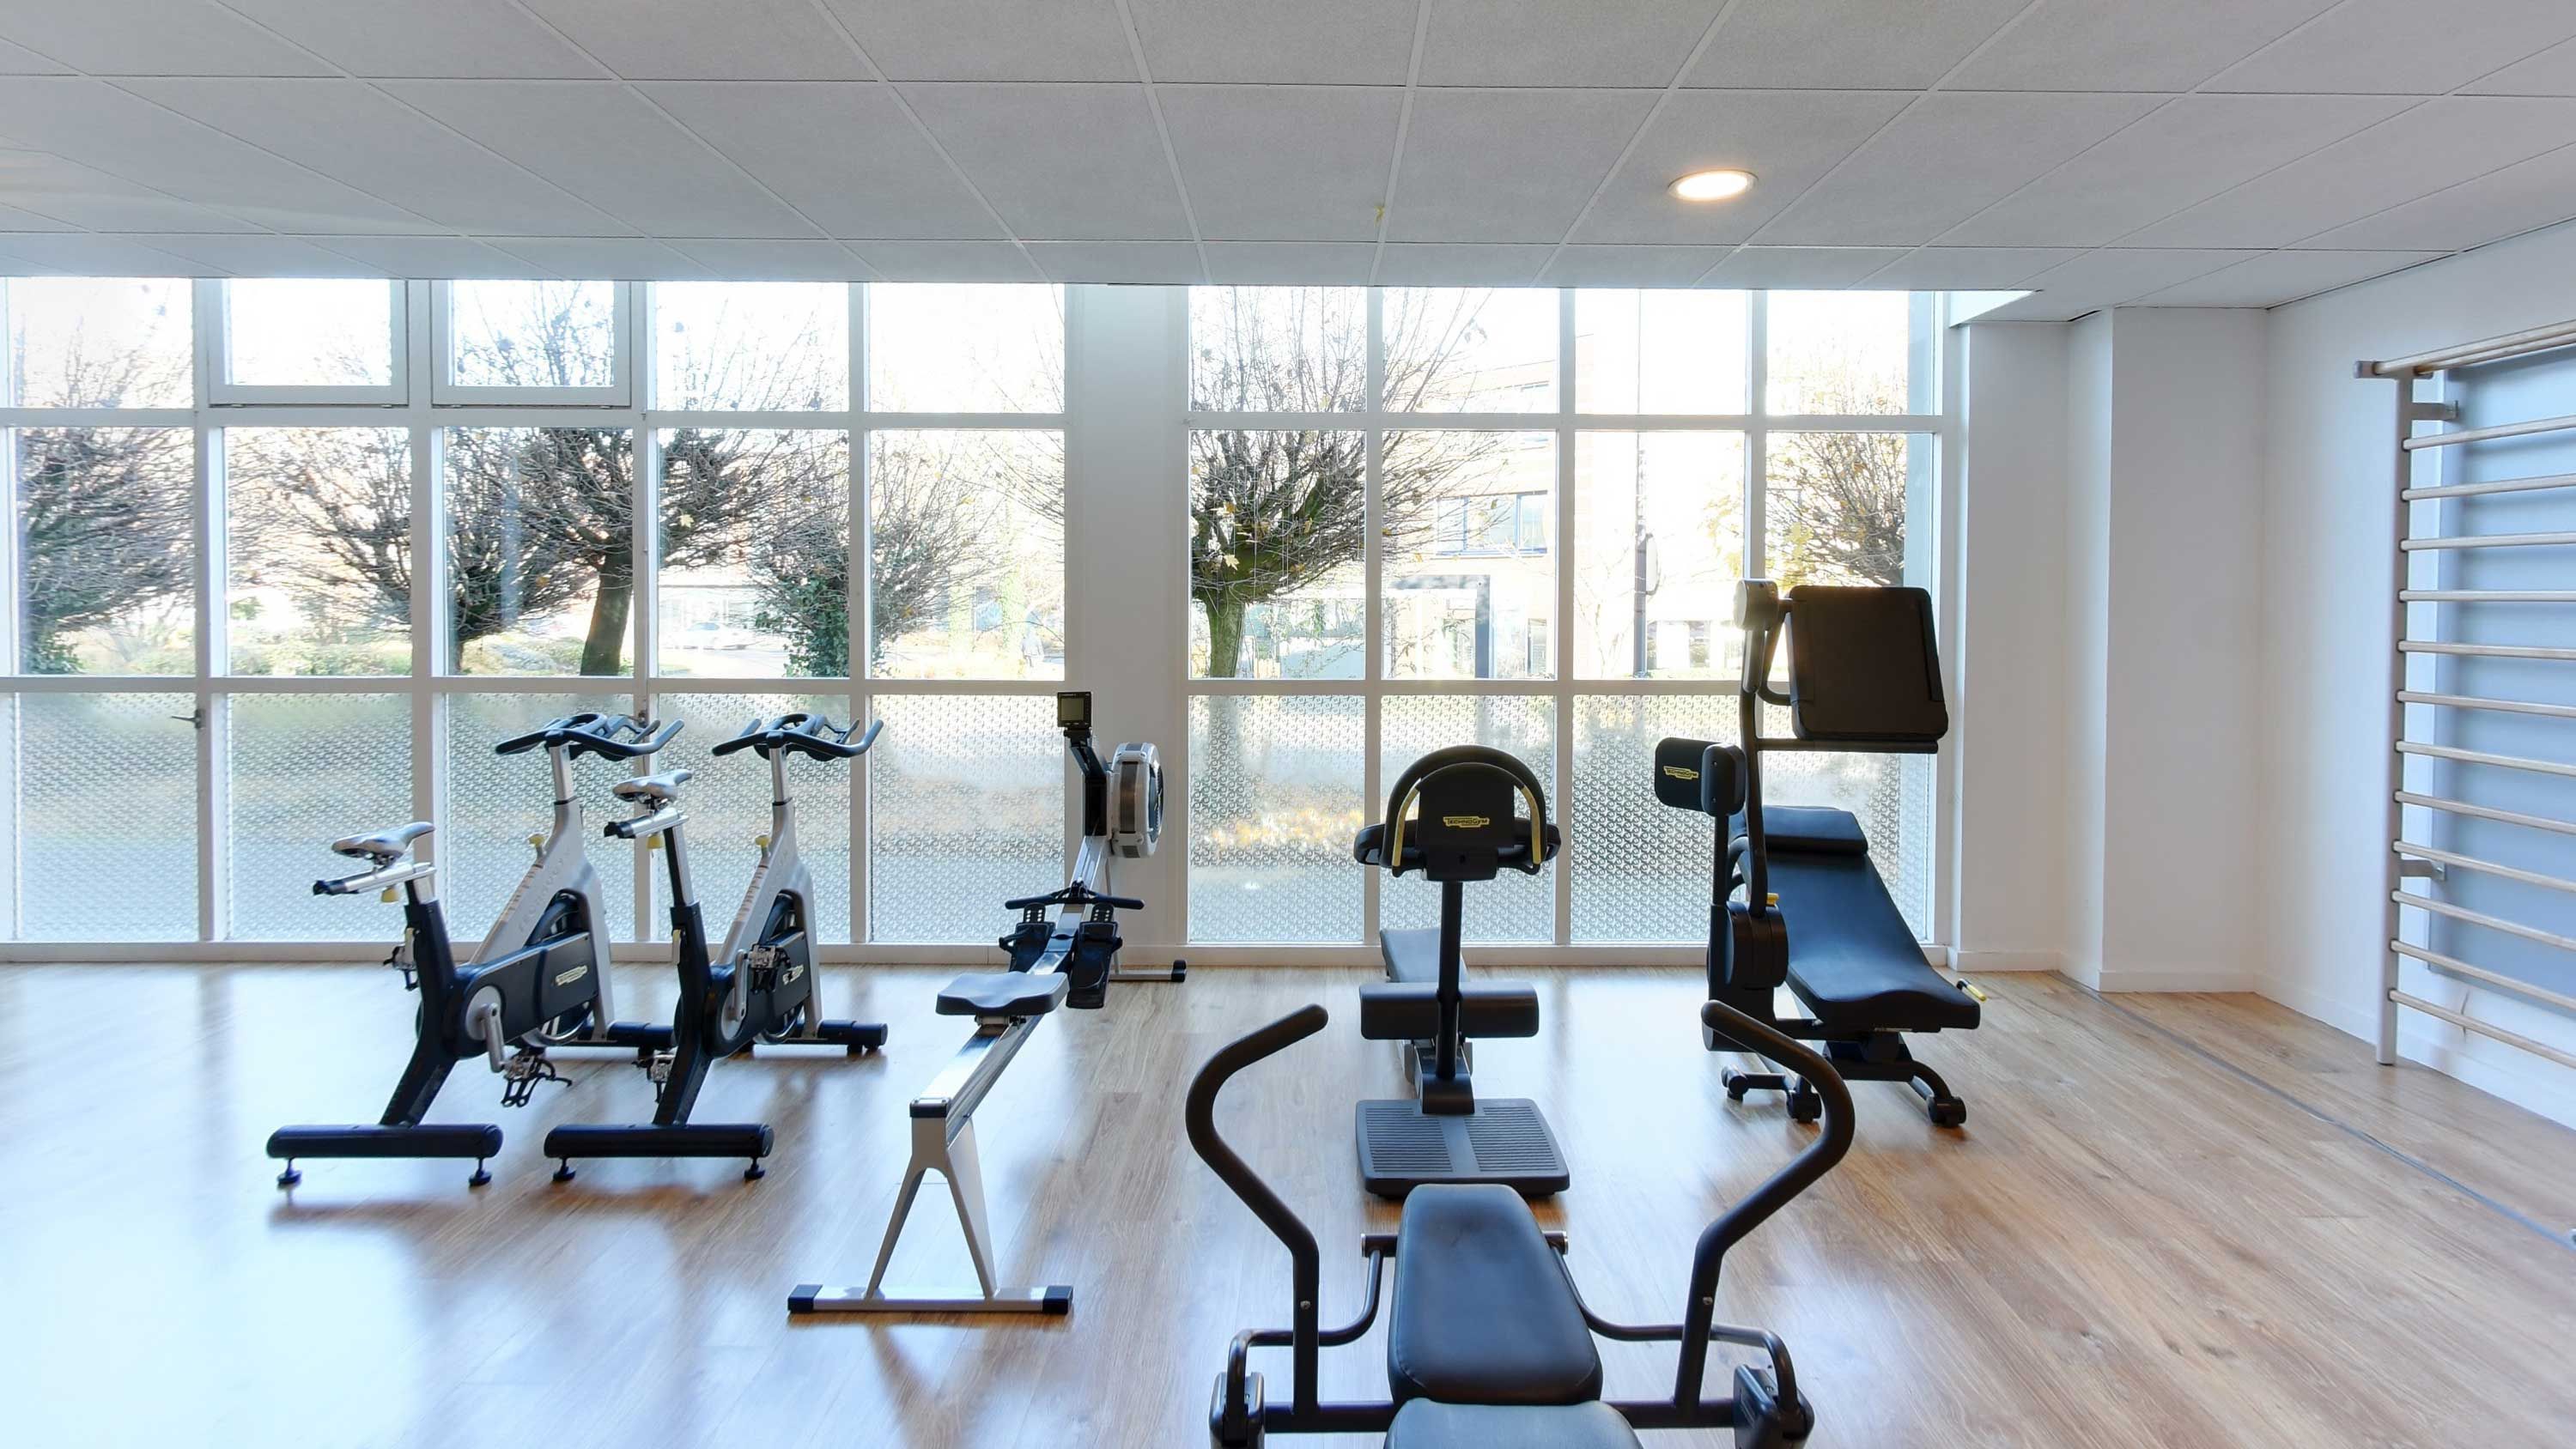 Home gym, wooden floors, exercise equipment